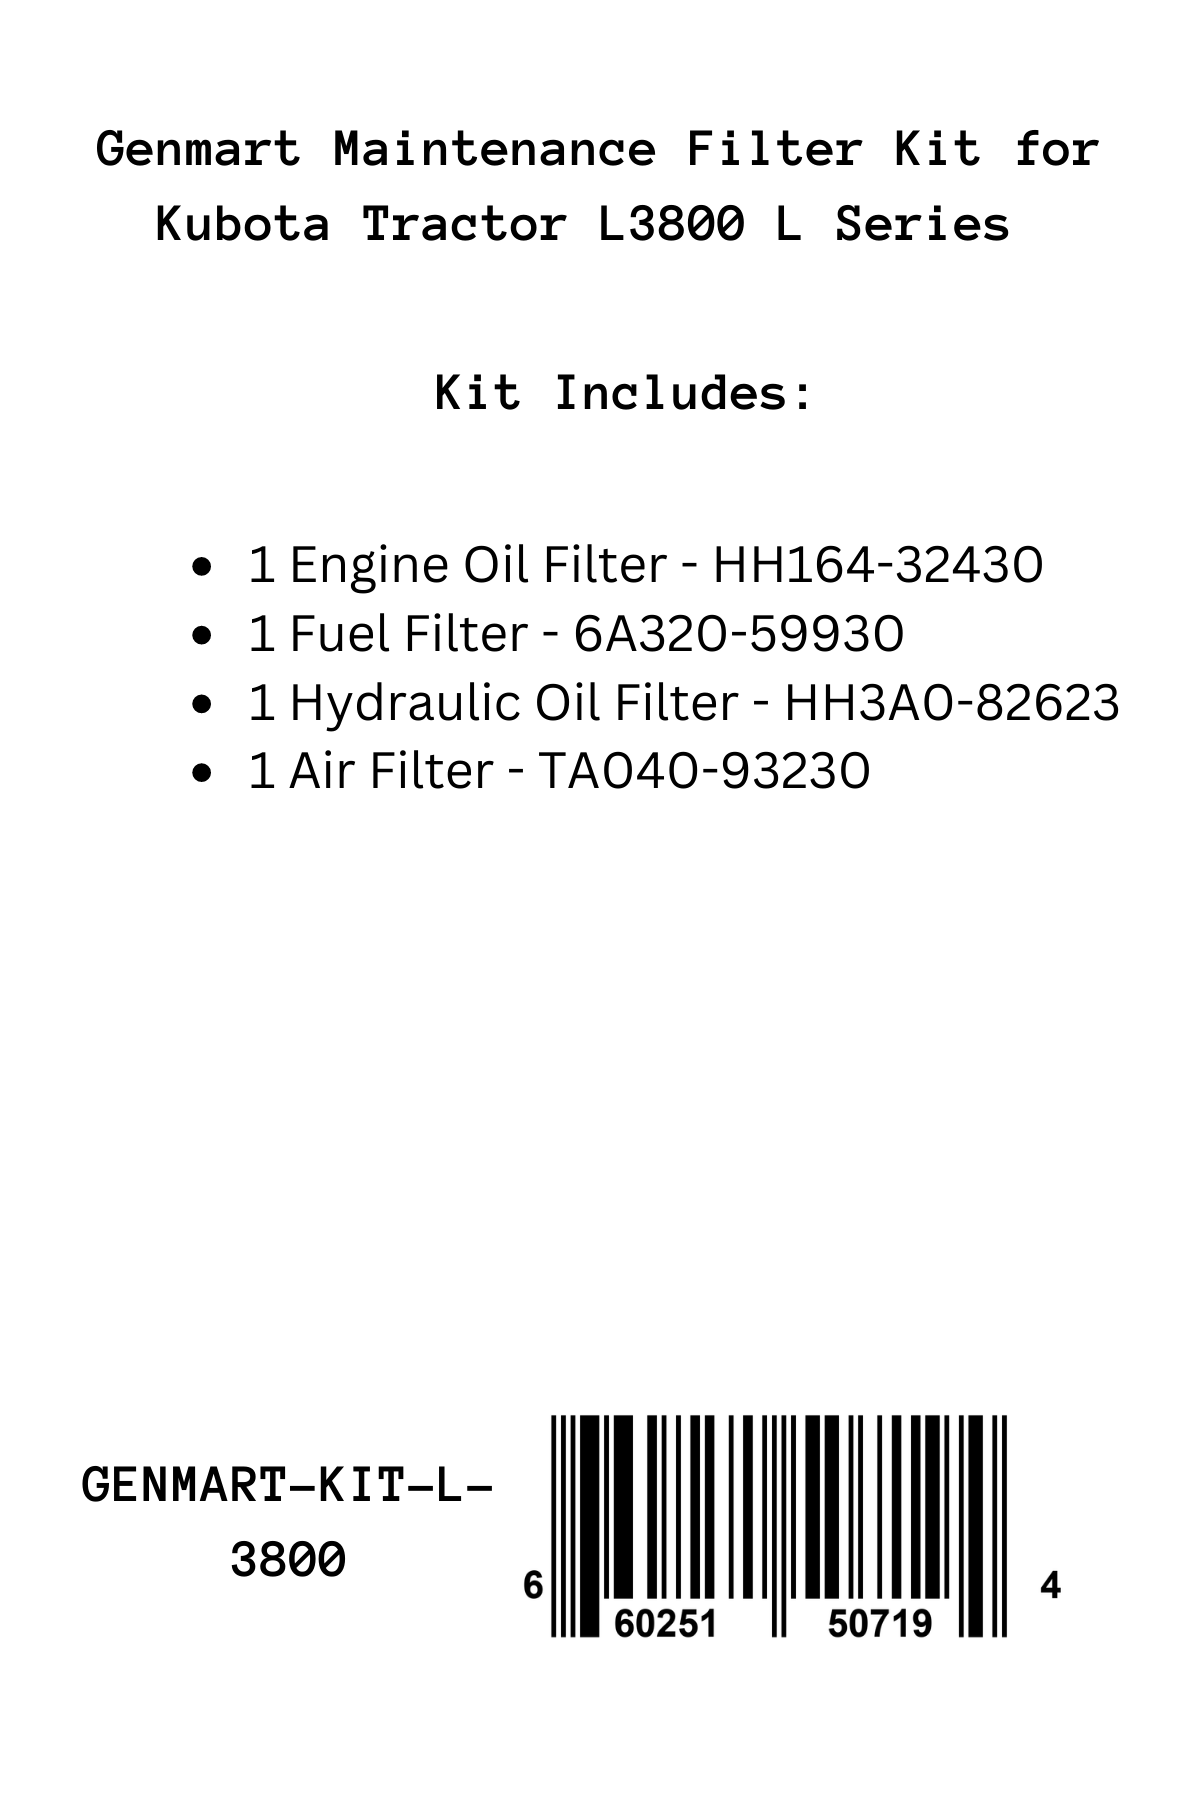 Genmart Maintenance Kit for Kubota Tractor L3800 L Series